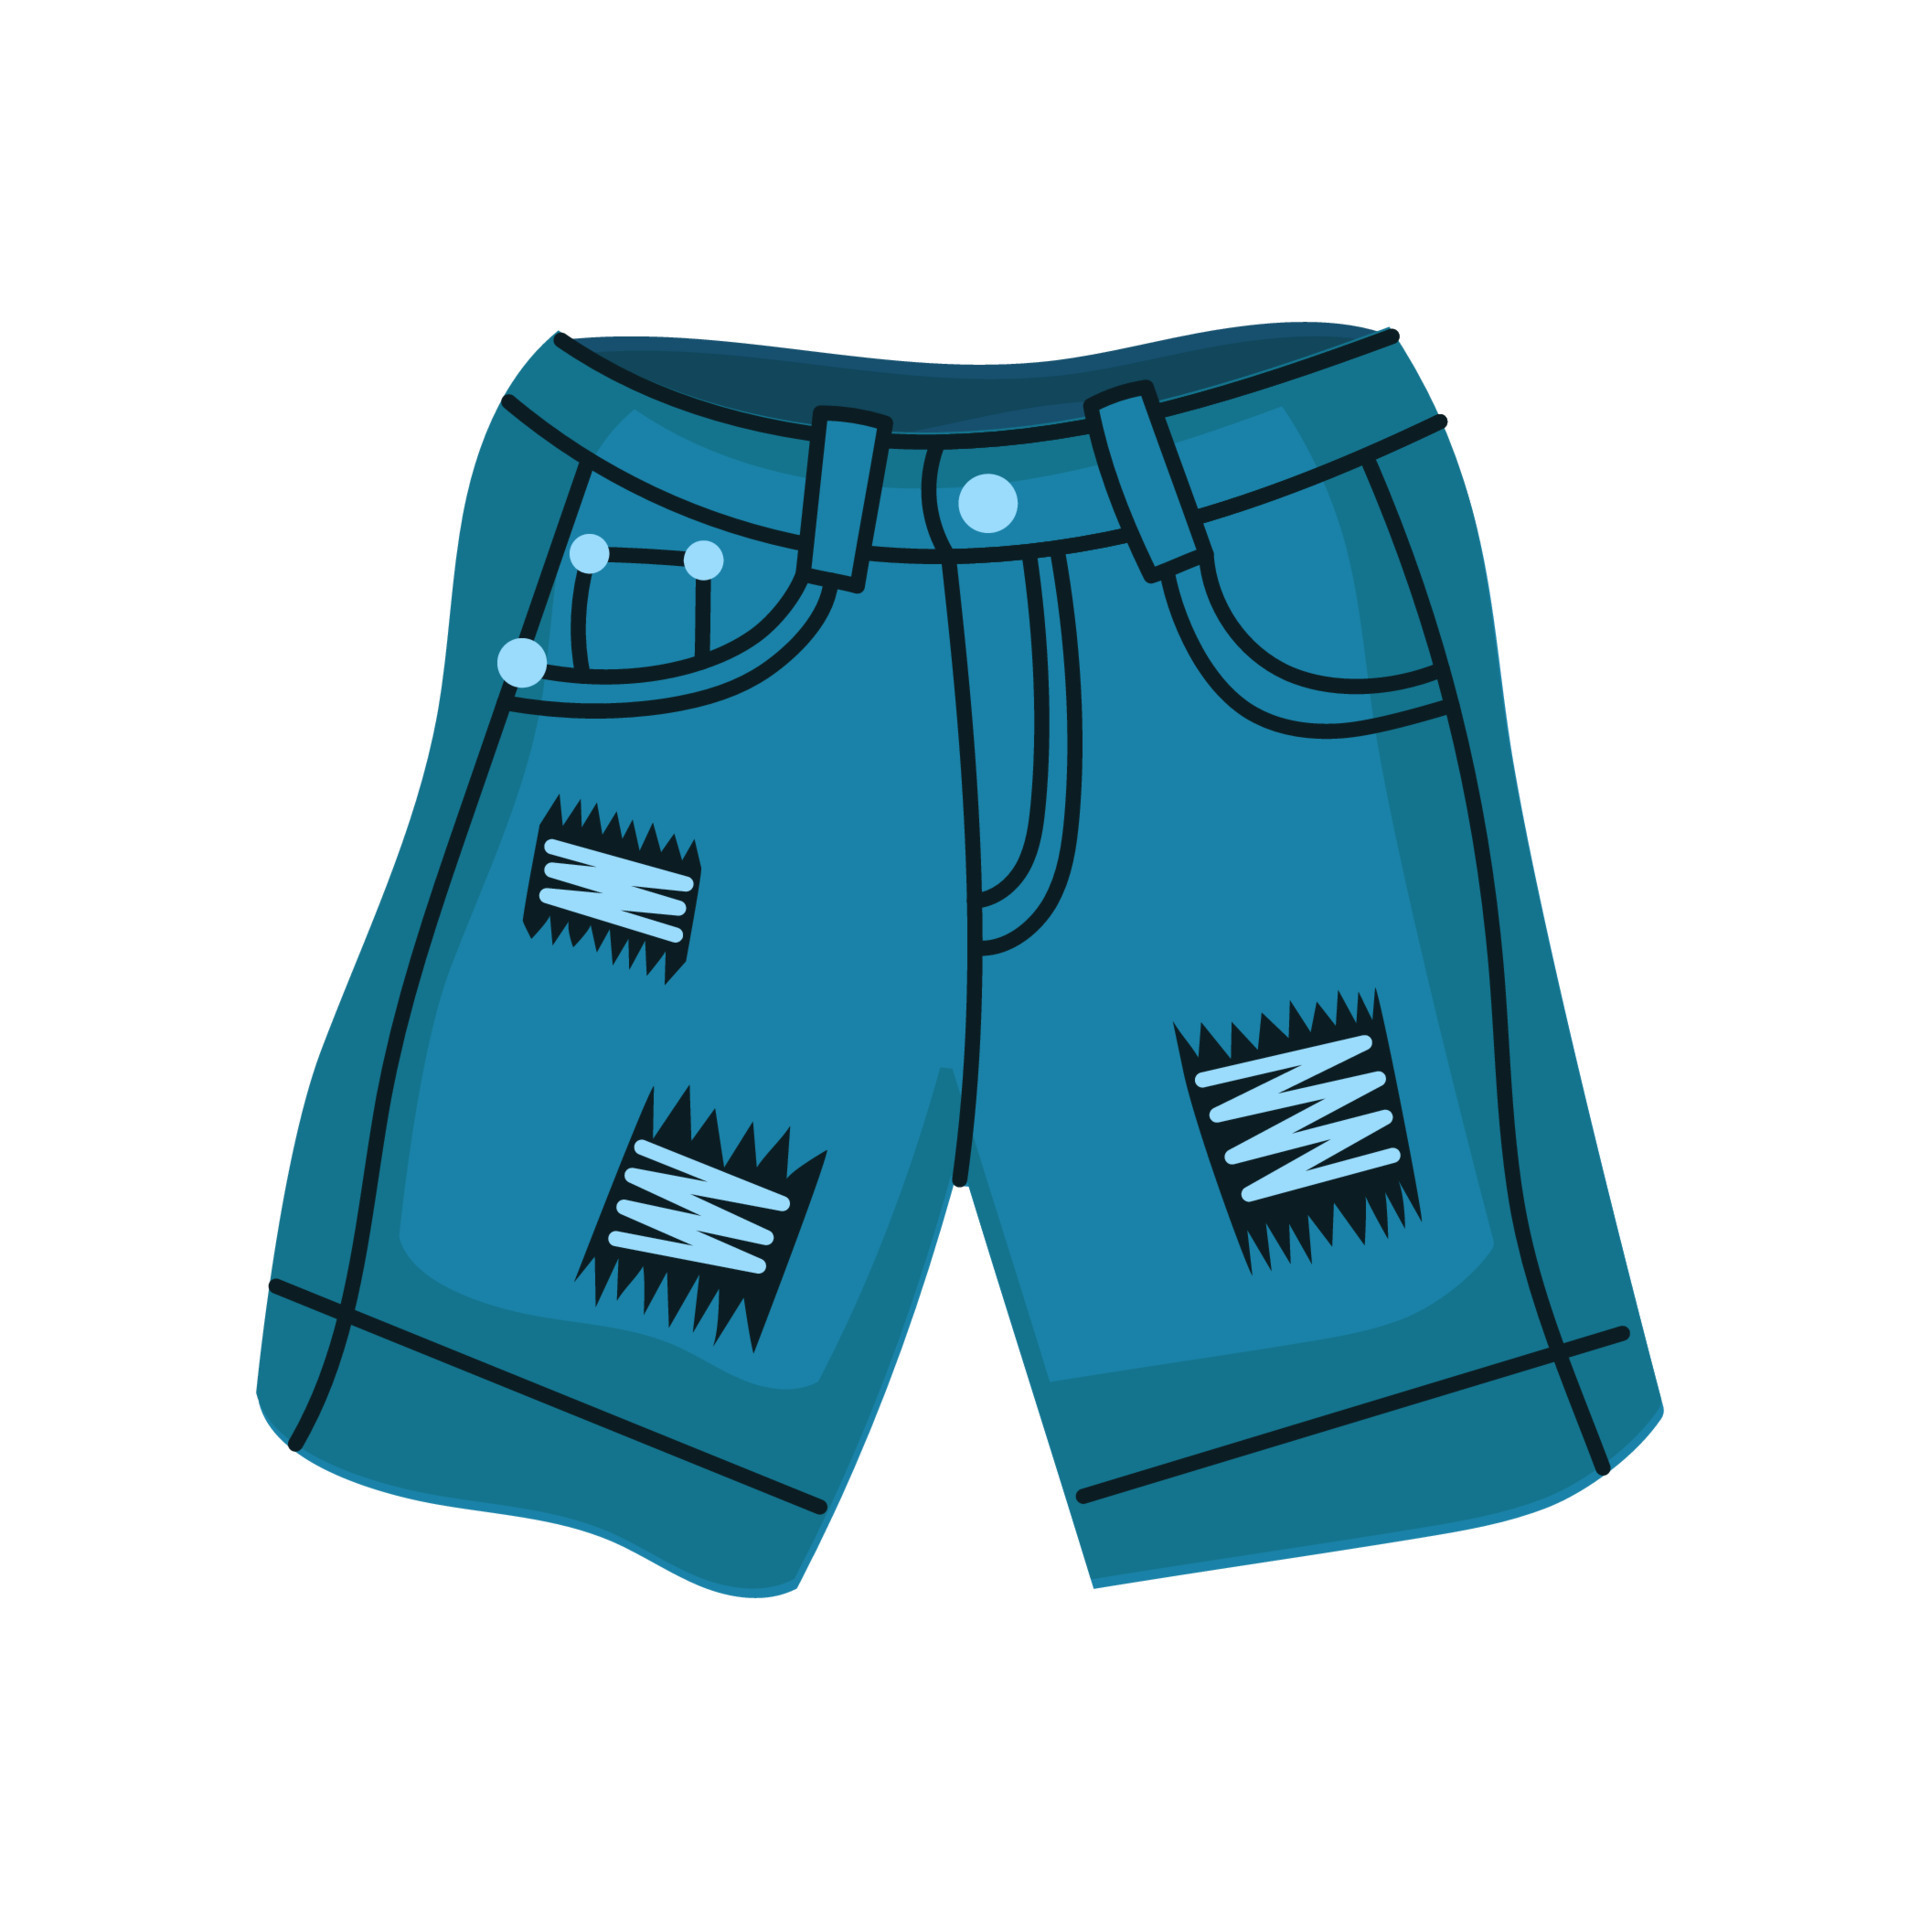 https://static.vecteezy.com/ti/vetor-gratis/p3/12892104-shorts-jeans-roupas-da-moda-para-mulheres-vestuario-textil-azul-casual-e-calcas-de-fabrica-de-vestuario-com-remendos-e-bolso-conceito-de-ilustracaoial-de-moda-vetor.jpg